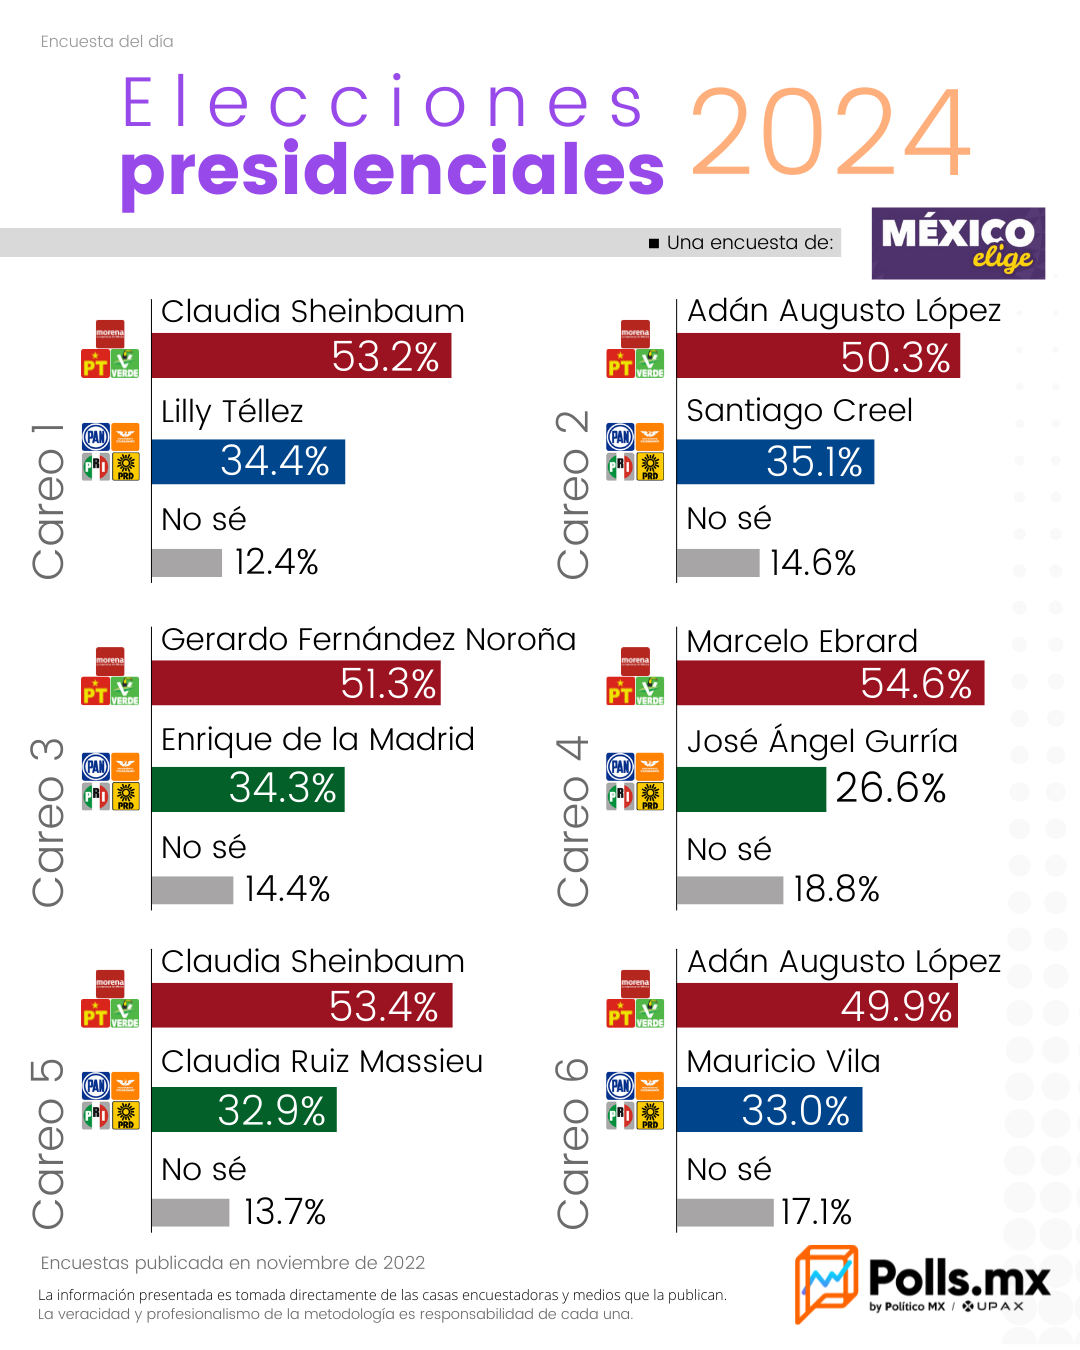 Polls MX